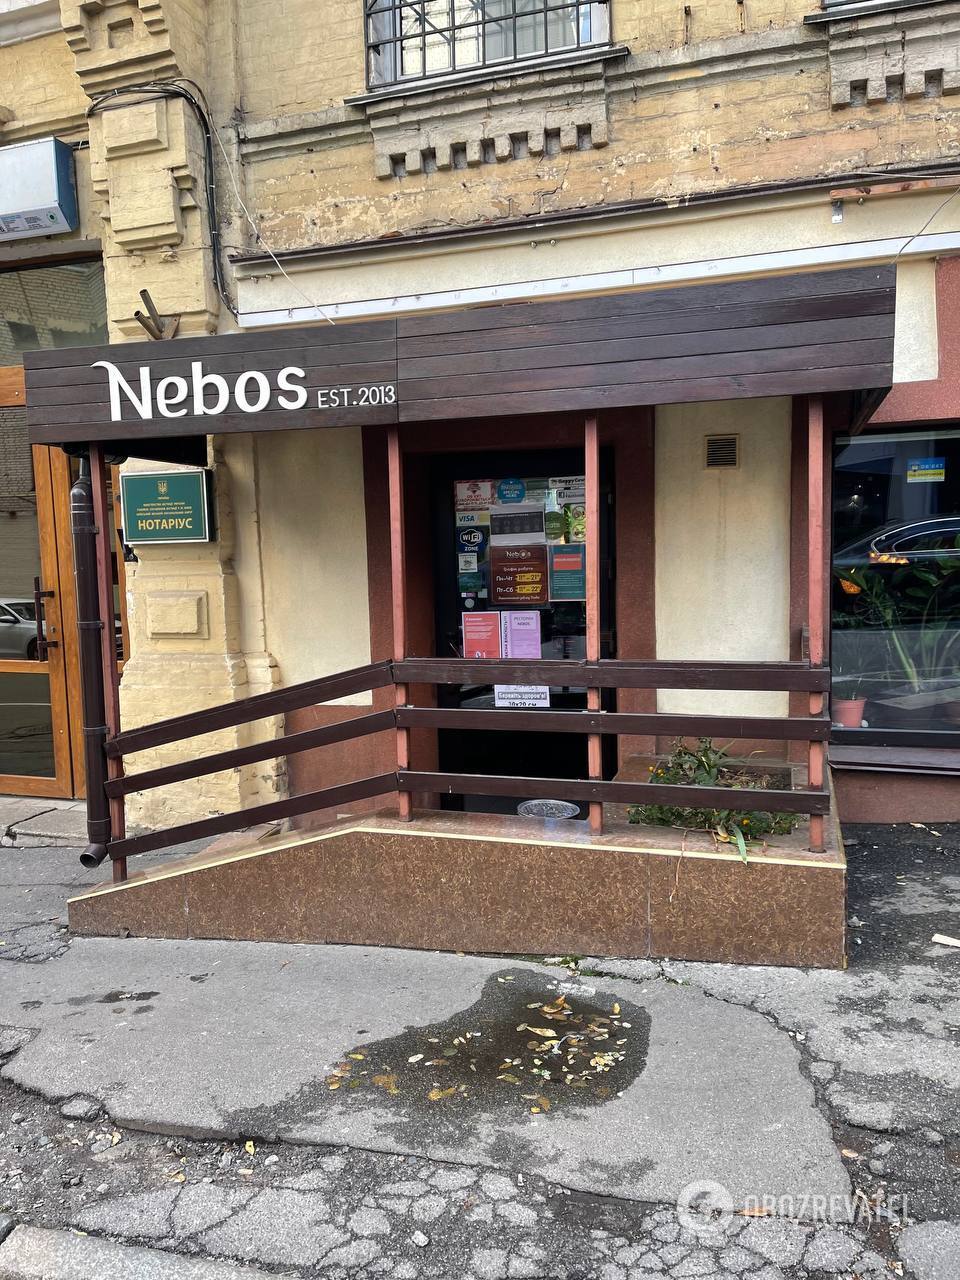  Nebos  